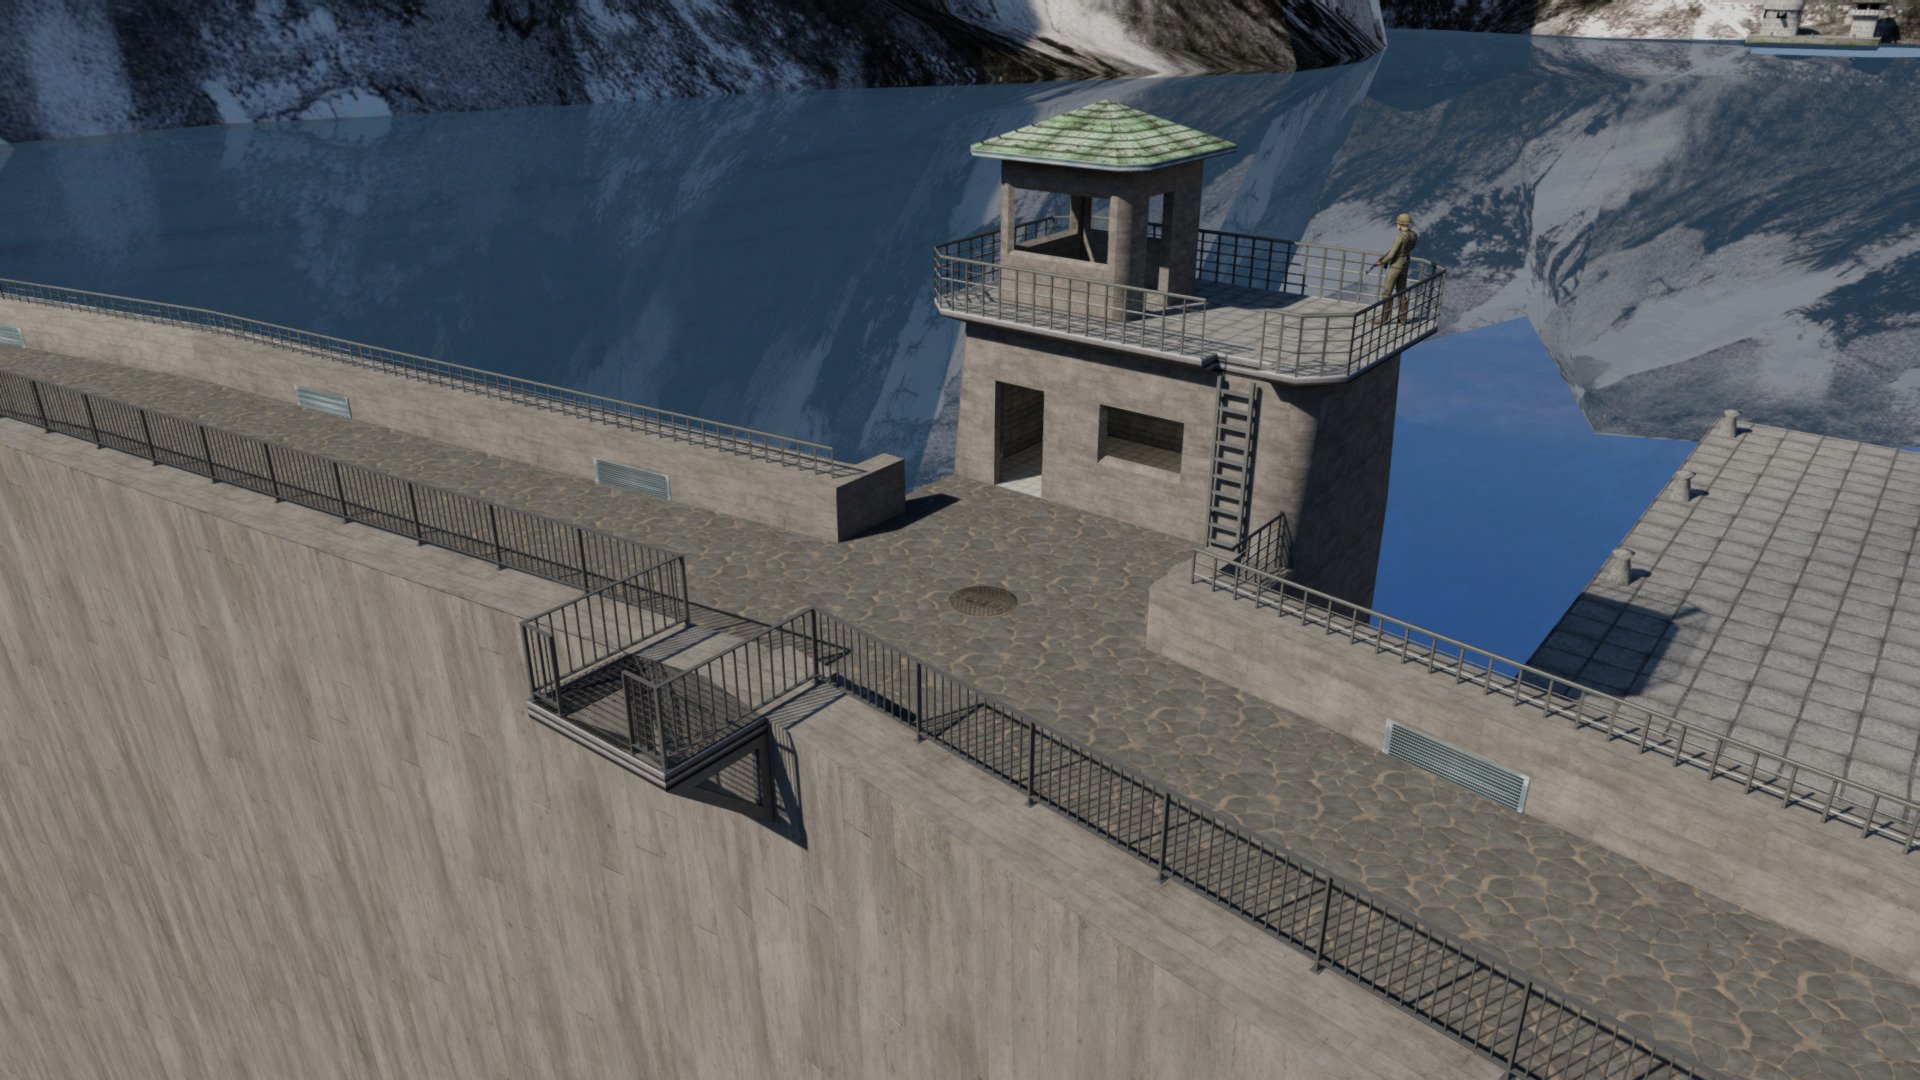 The Dam level in 'GoldenEye 007' for N64 vs 'GoldenEye 007